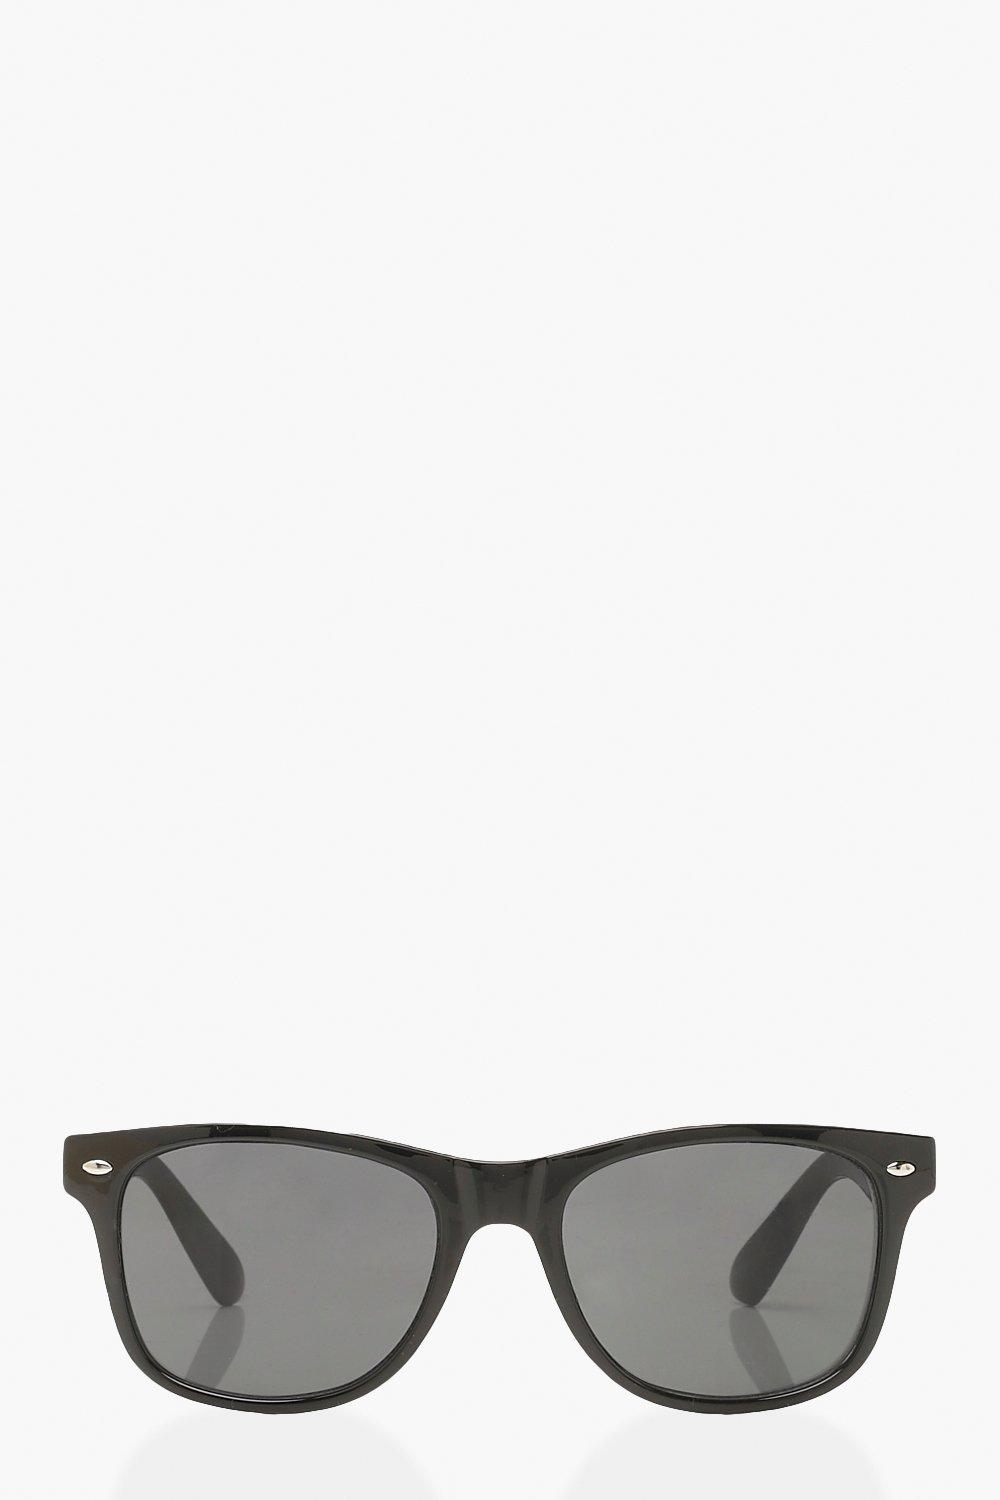 SALE Classic Wayfarer Style Sunglasses